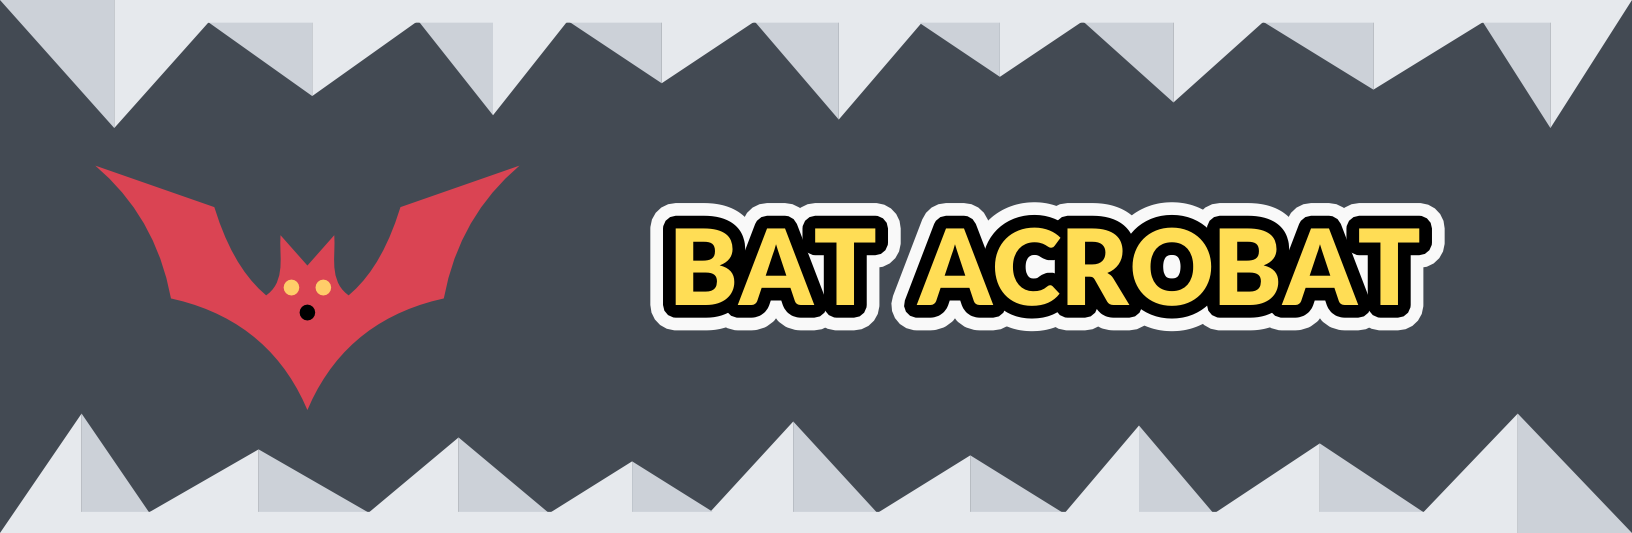 Bat Acrobat